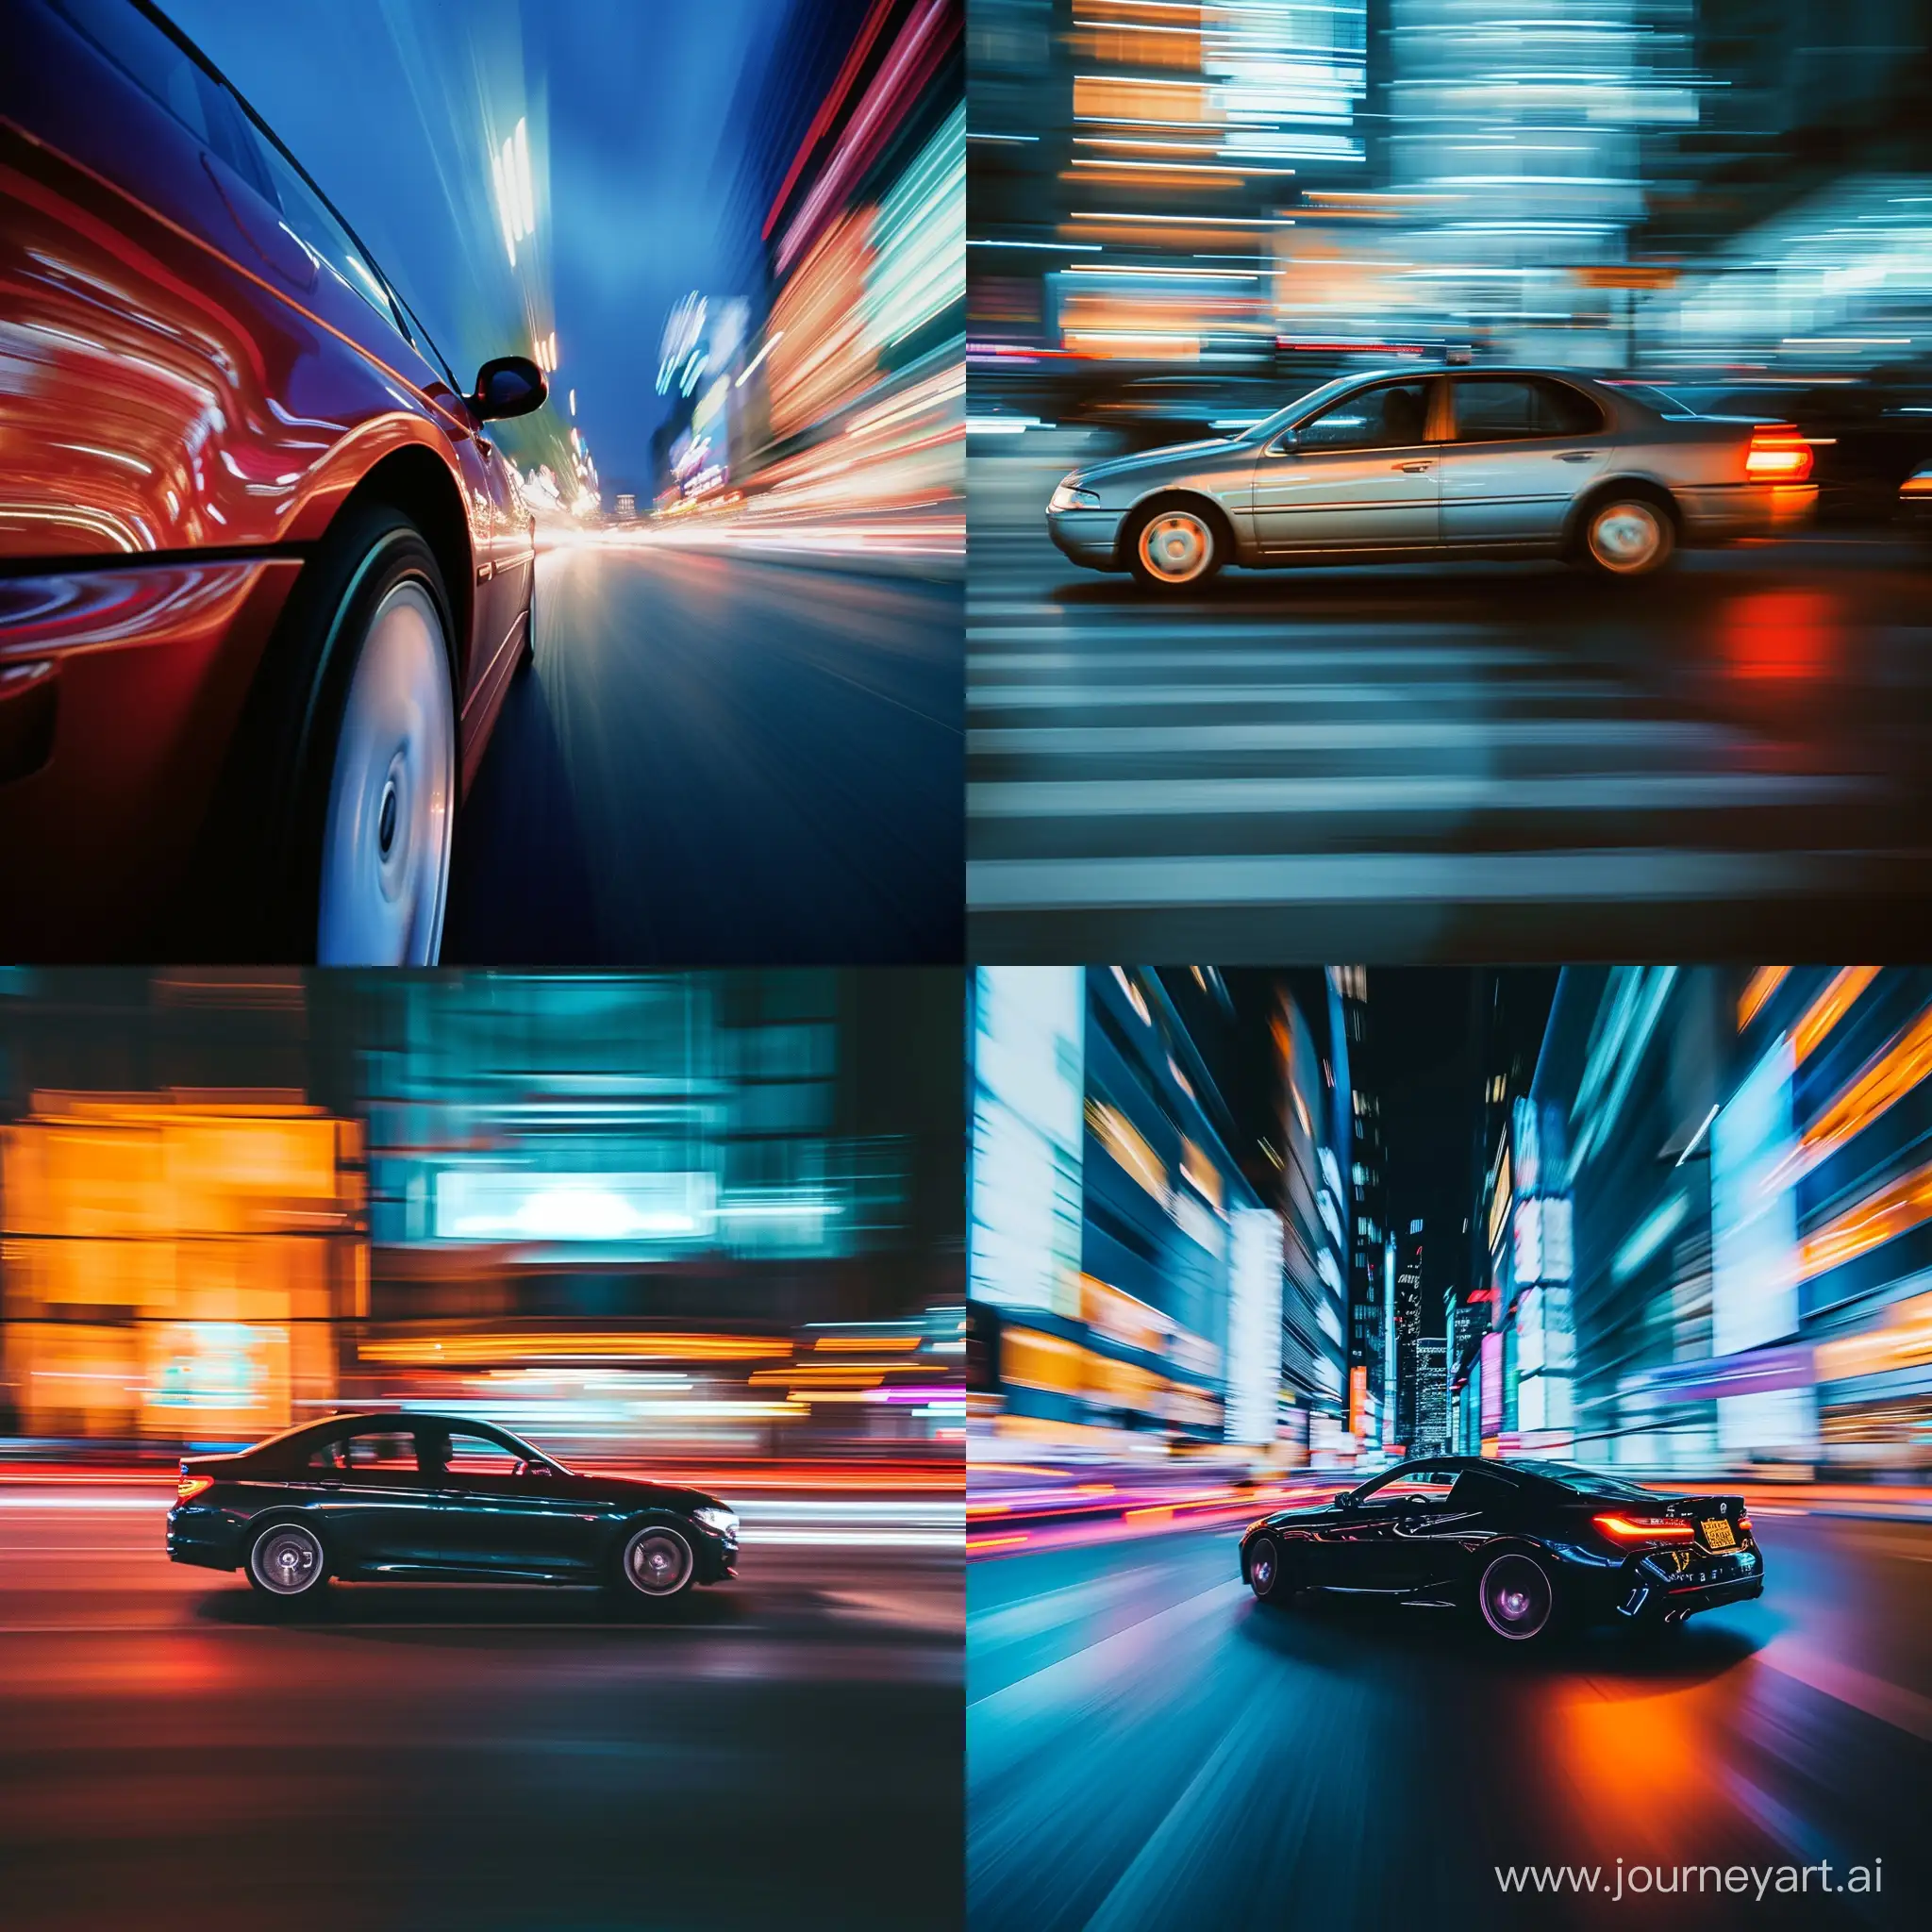 Dynamic-Car-in-Motion-Vibrant-11-Artwork